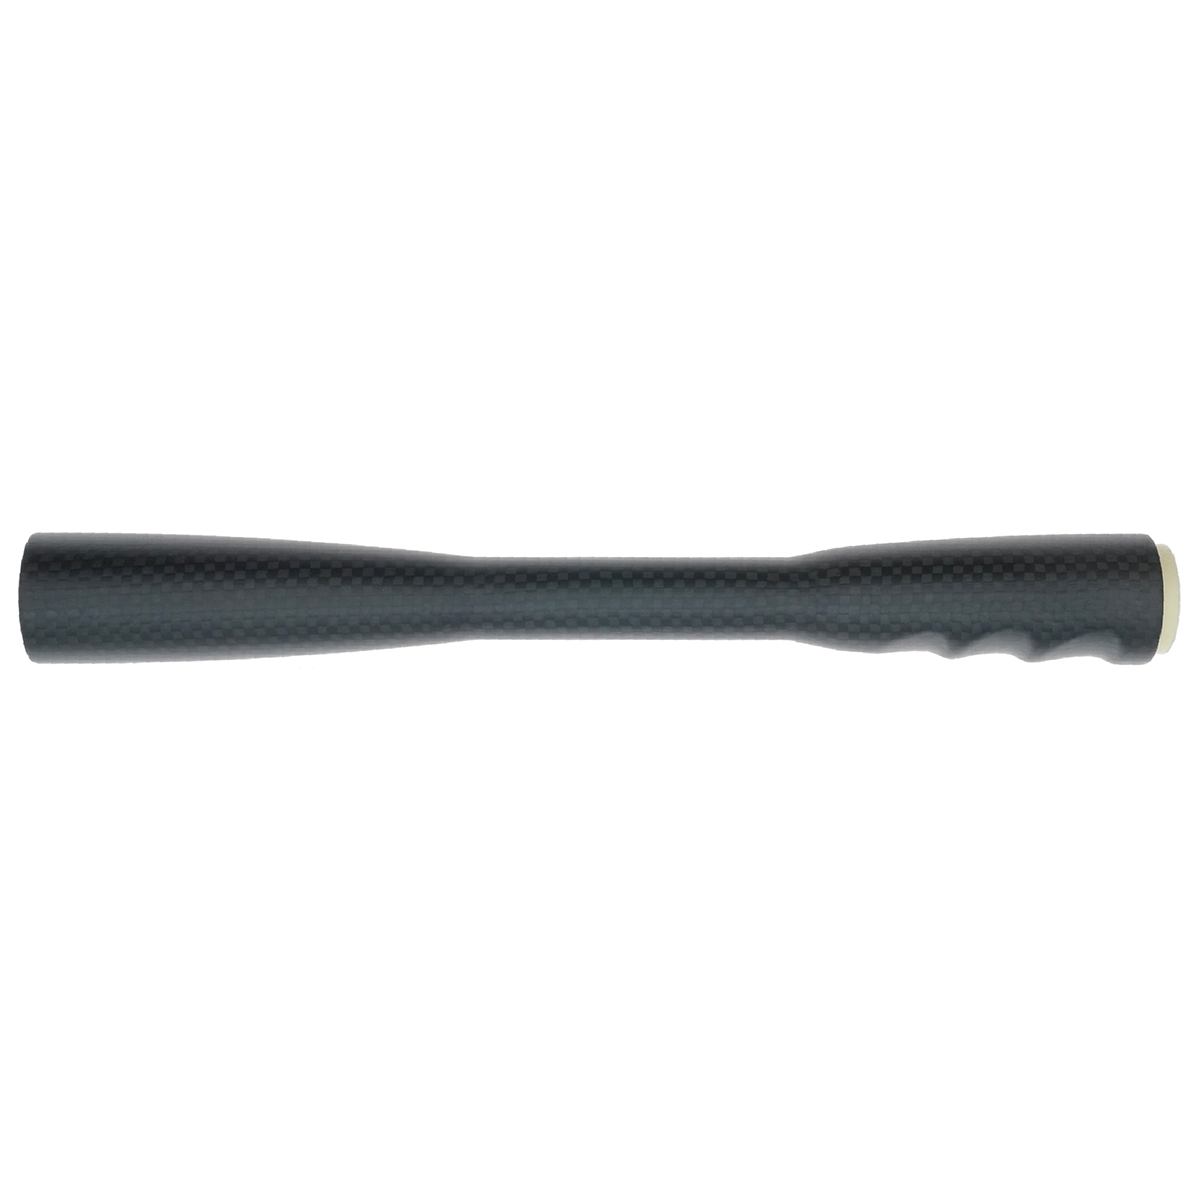 Seaguide PR Carbon Grip Soft Touch